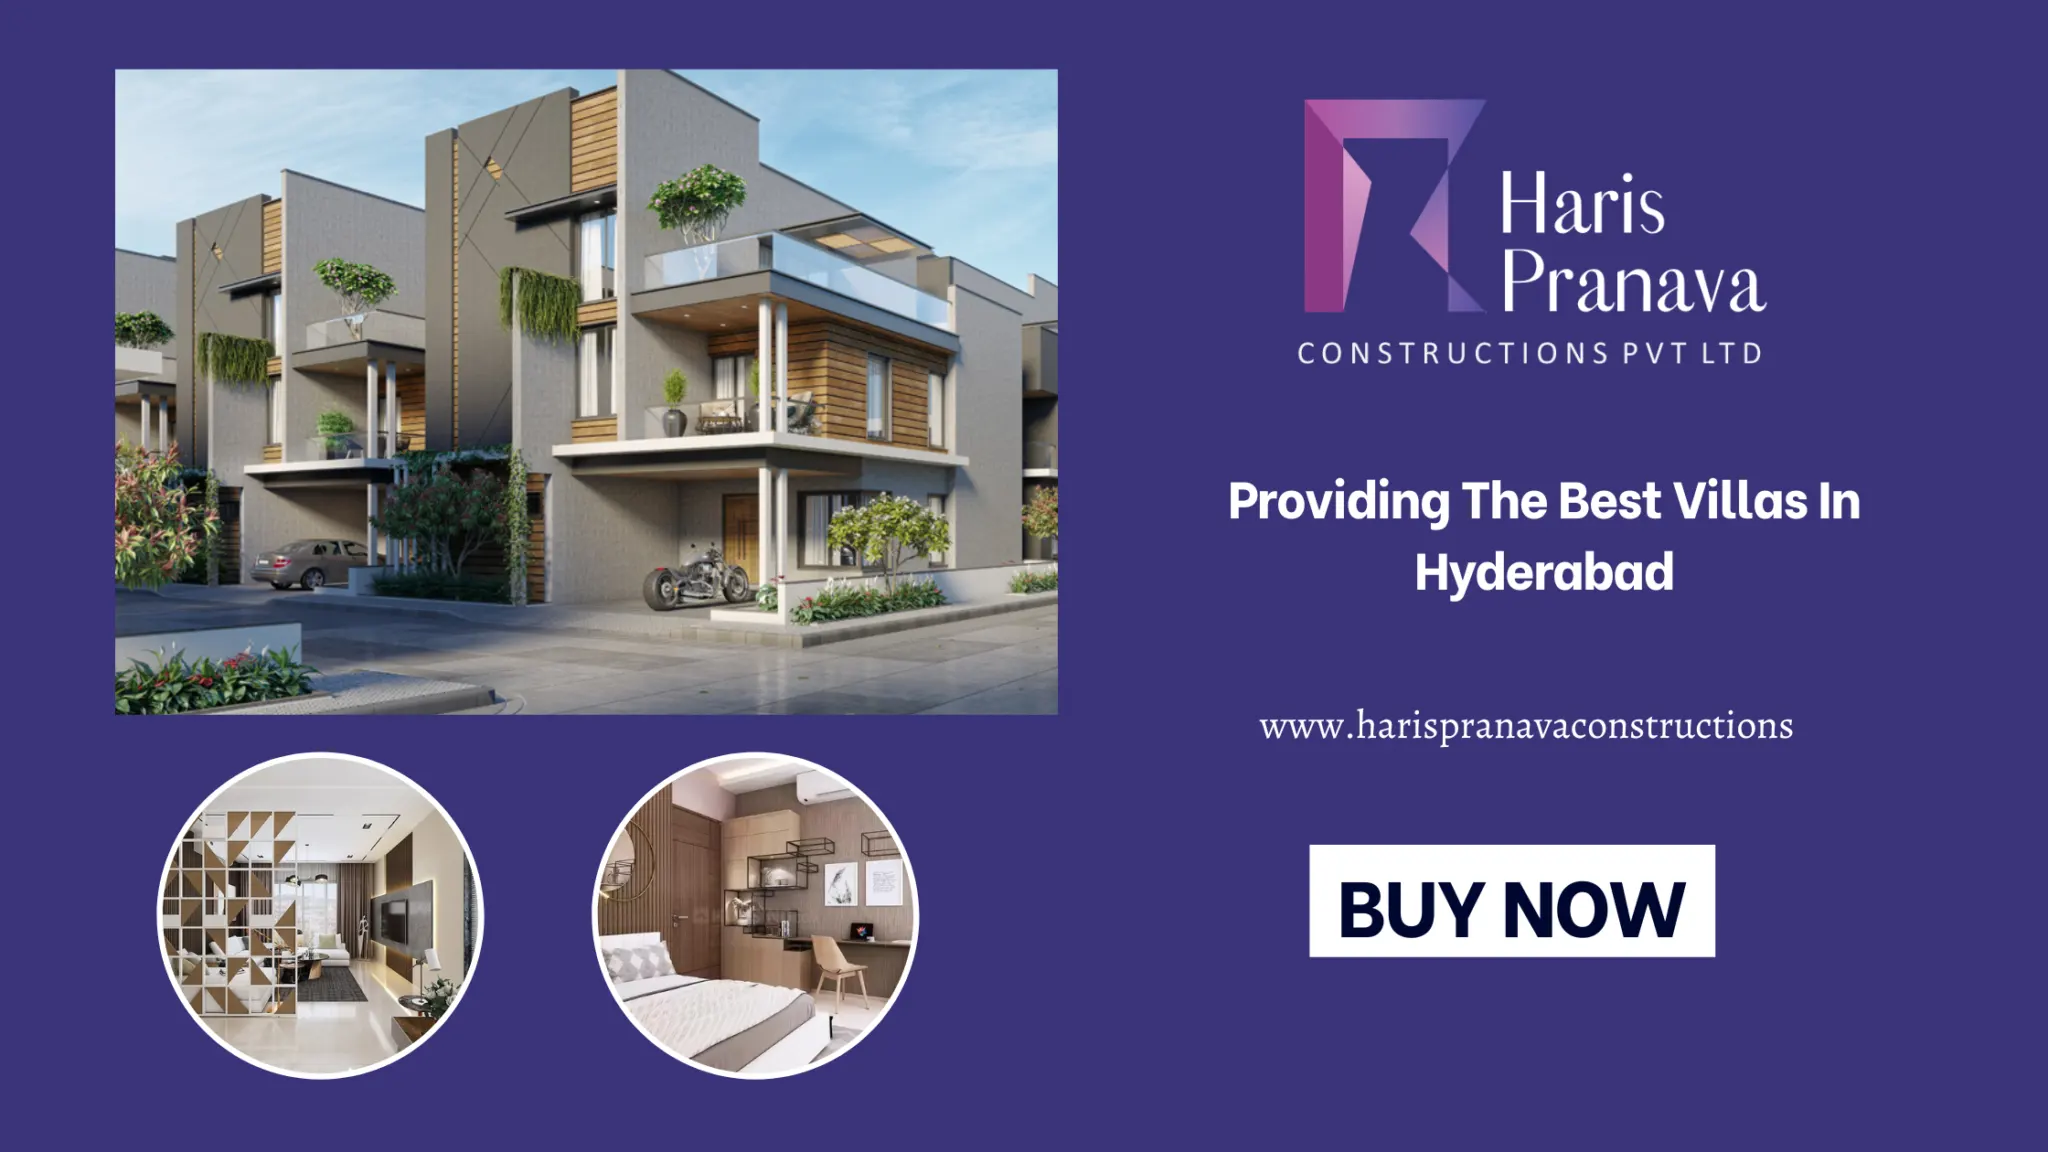 How is Haris Pranava Constructions Providing The Best Villas In Hyderabad